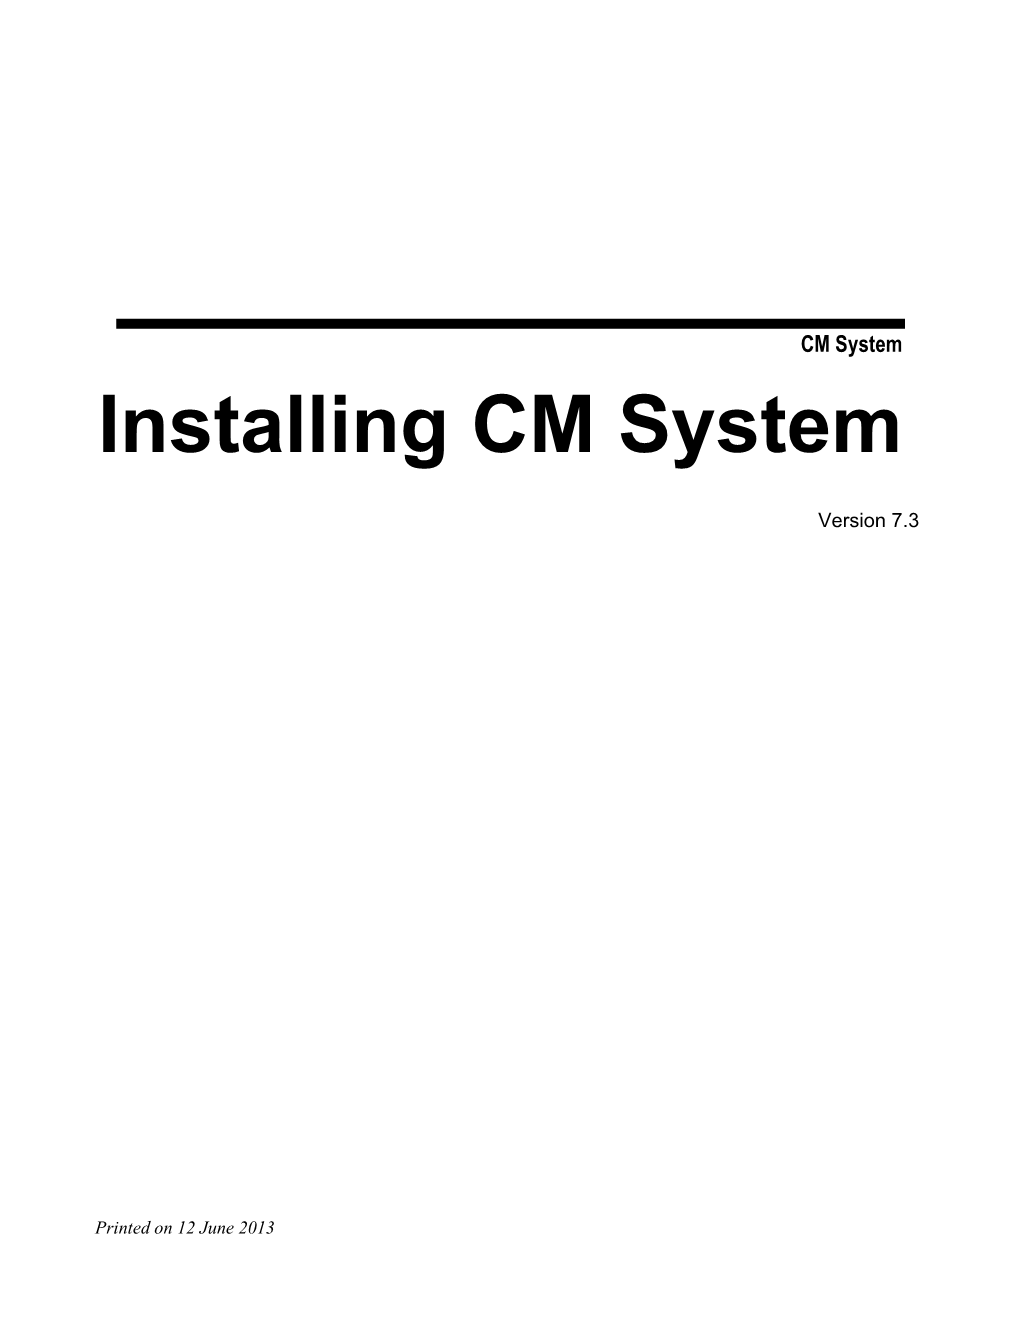 Installing CM System Version